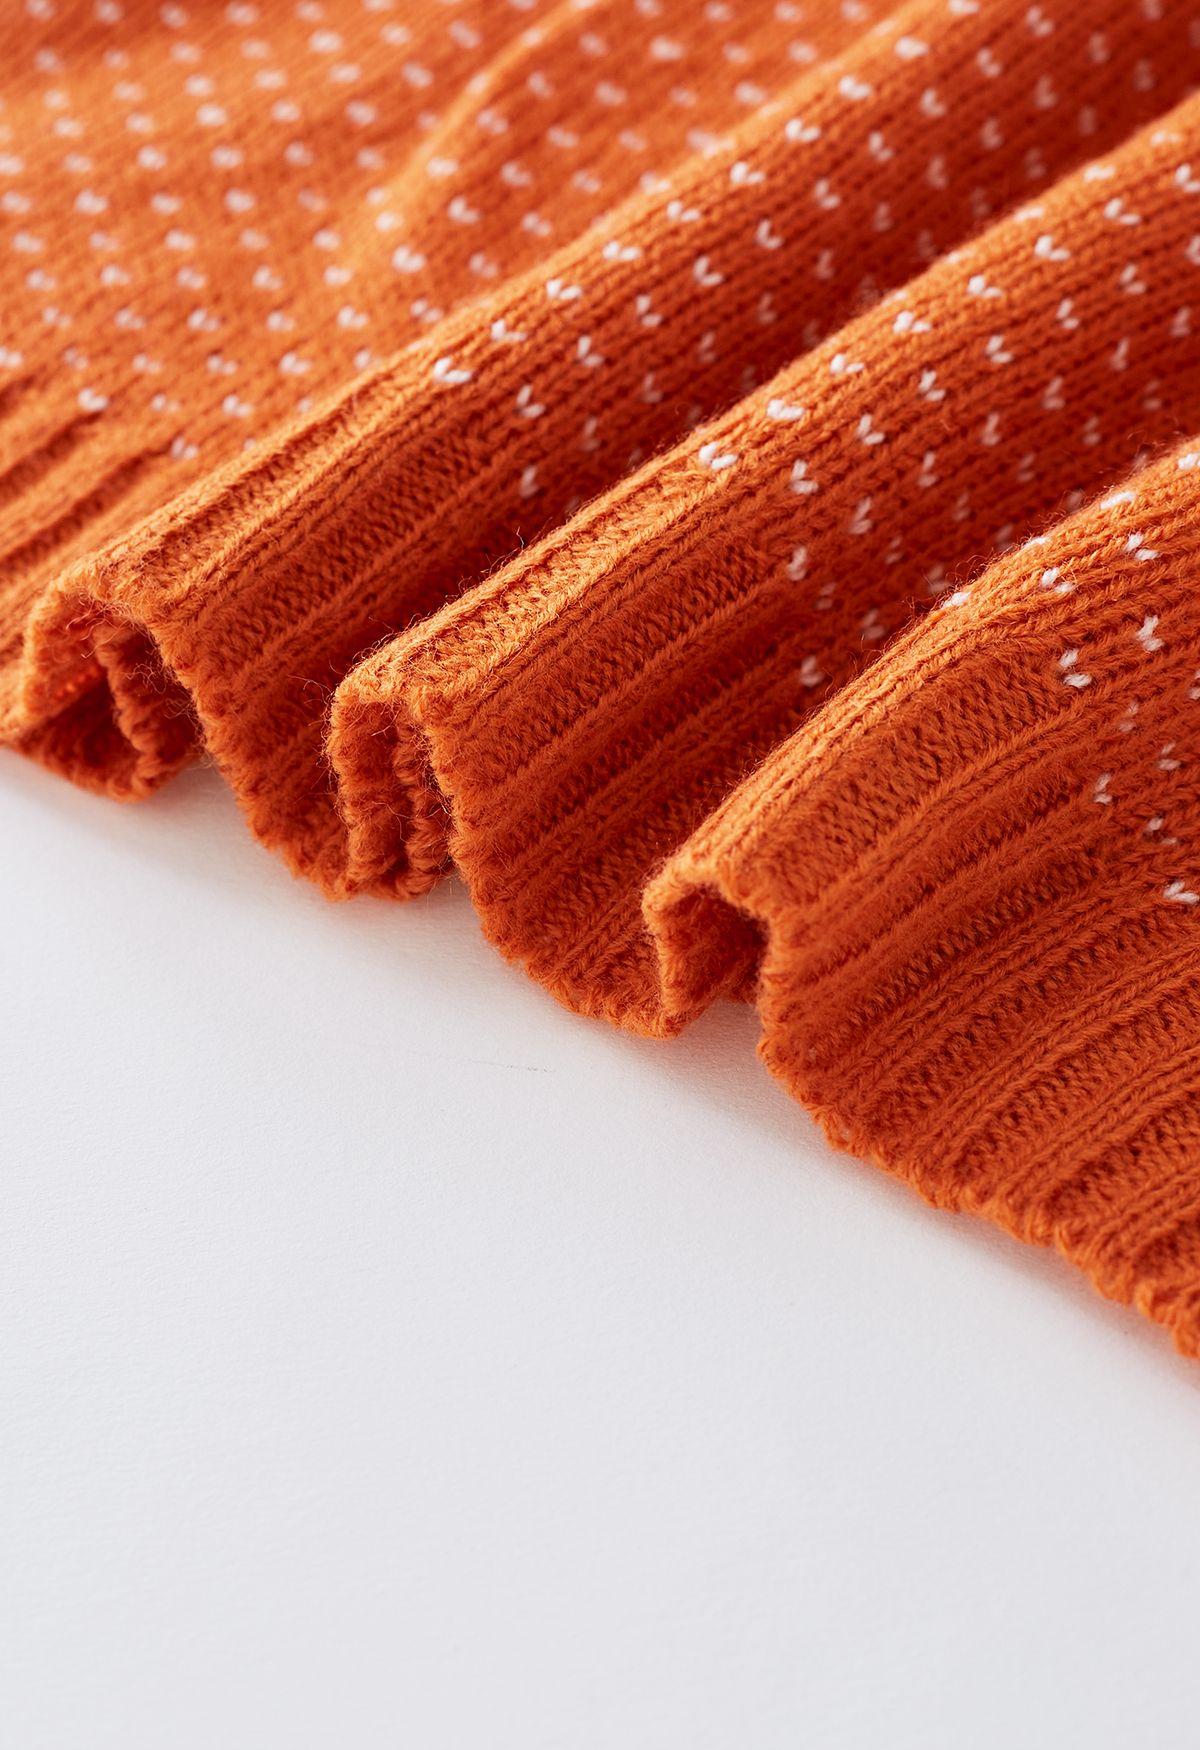 Lindo suéter de malha de mangas compridas Ghost em laranja